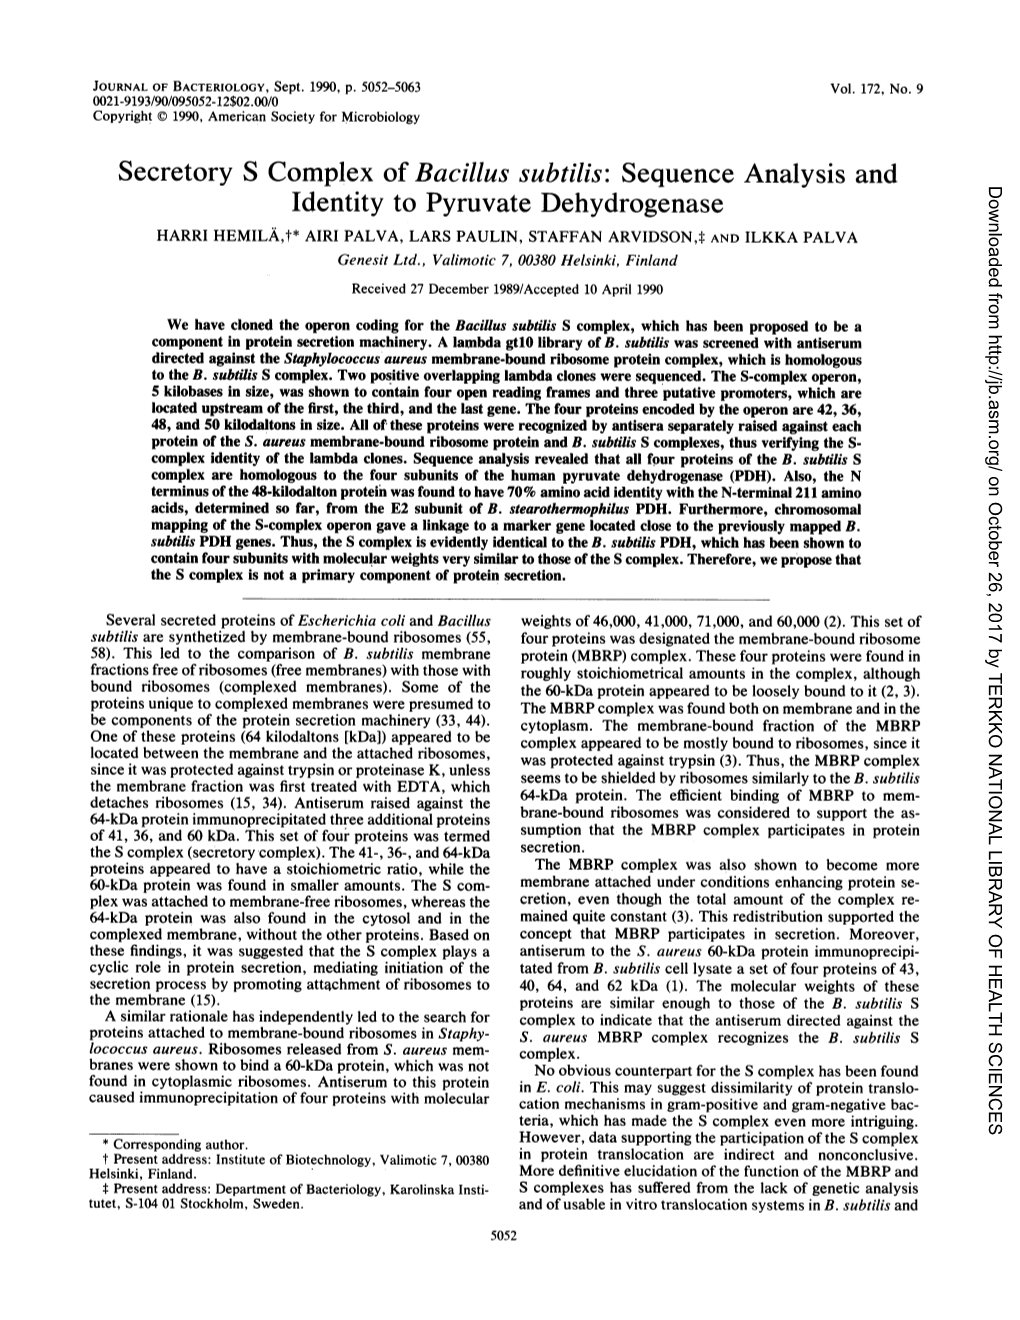 Secretory S Complex of Bacillus Subtilis: Sequence Analysis and Identity to Pyruvate Dehydrogenase